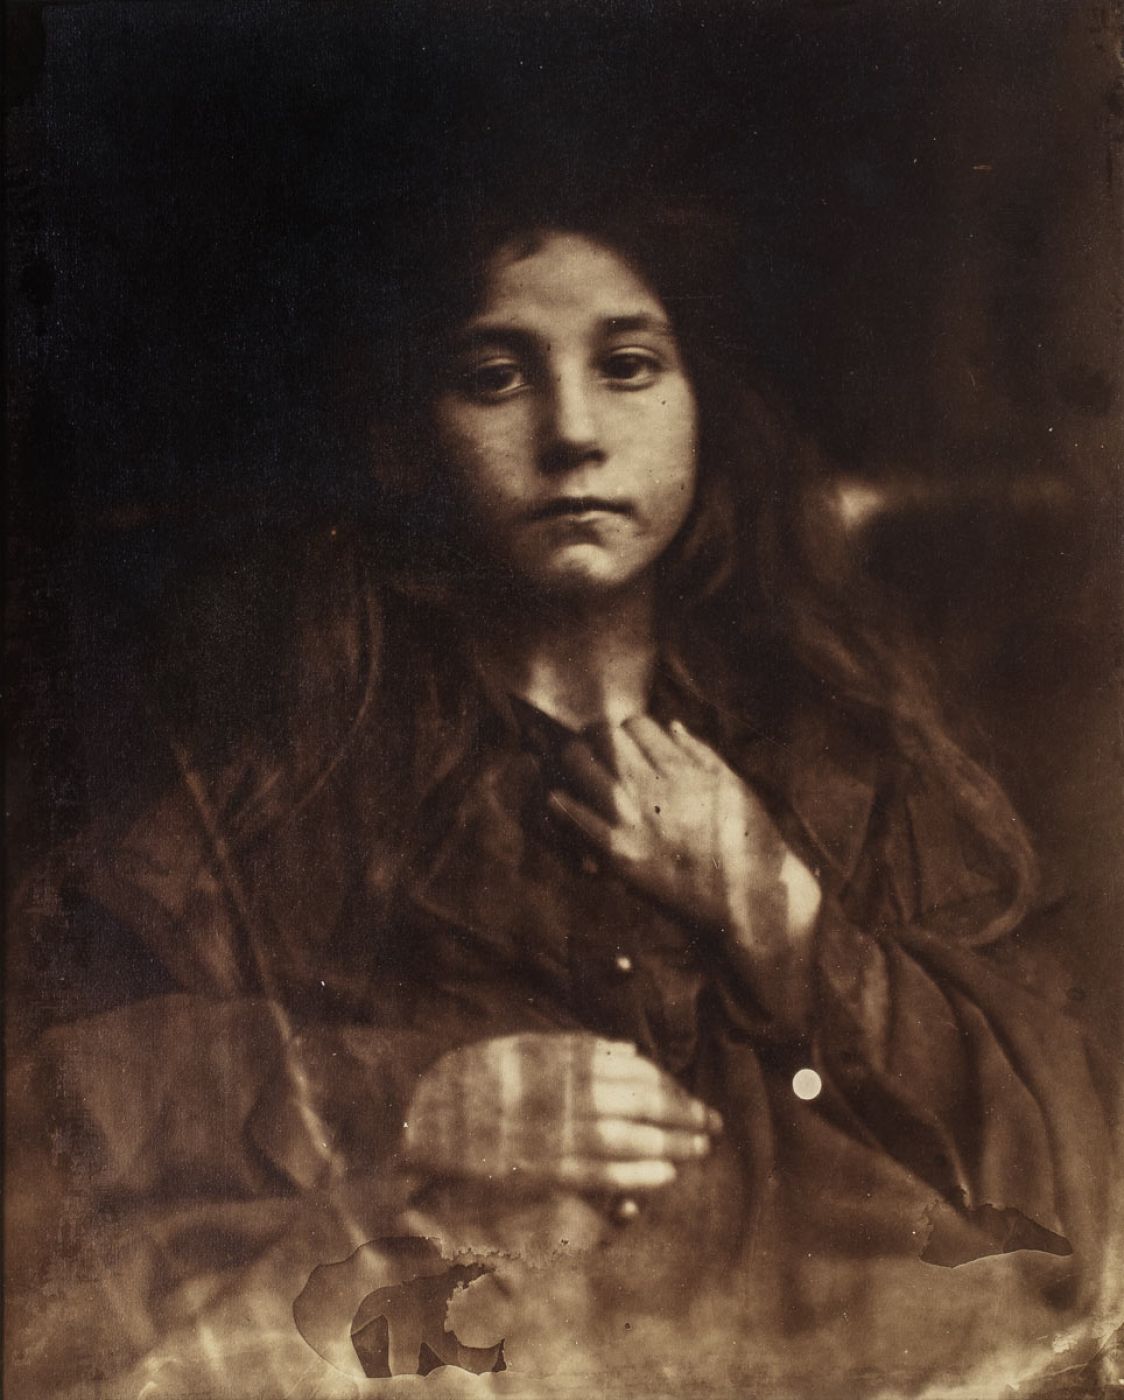 Julia Margaret Cameron, “Kate Keown, Half-length study”, 1864 ca.